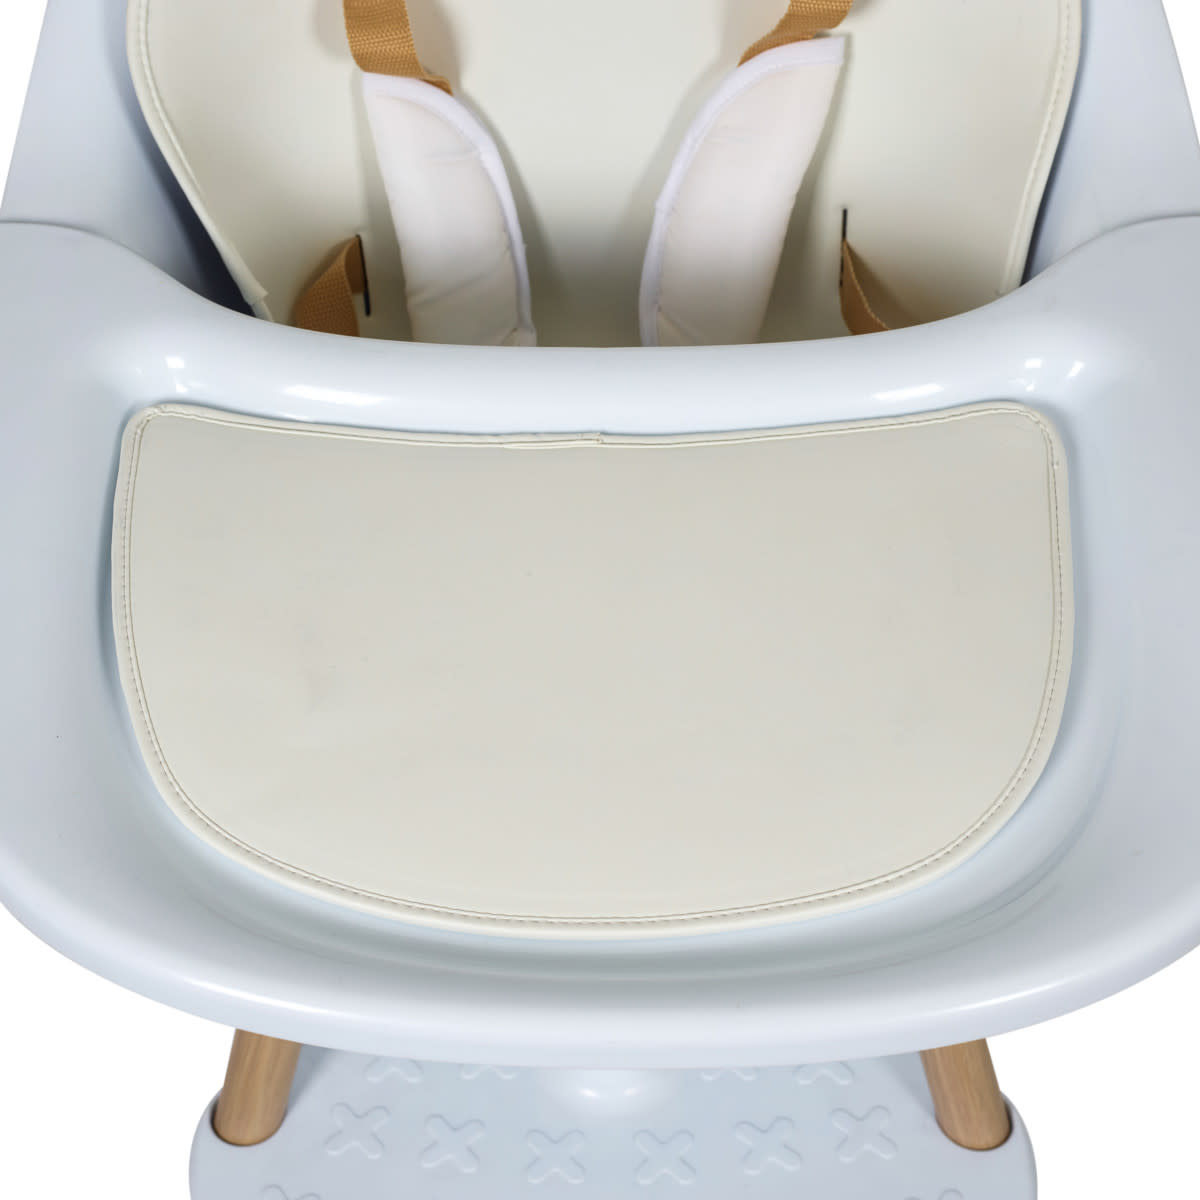 Quax Quax Ultimo 3 Luxe High Chair - White-Natural